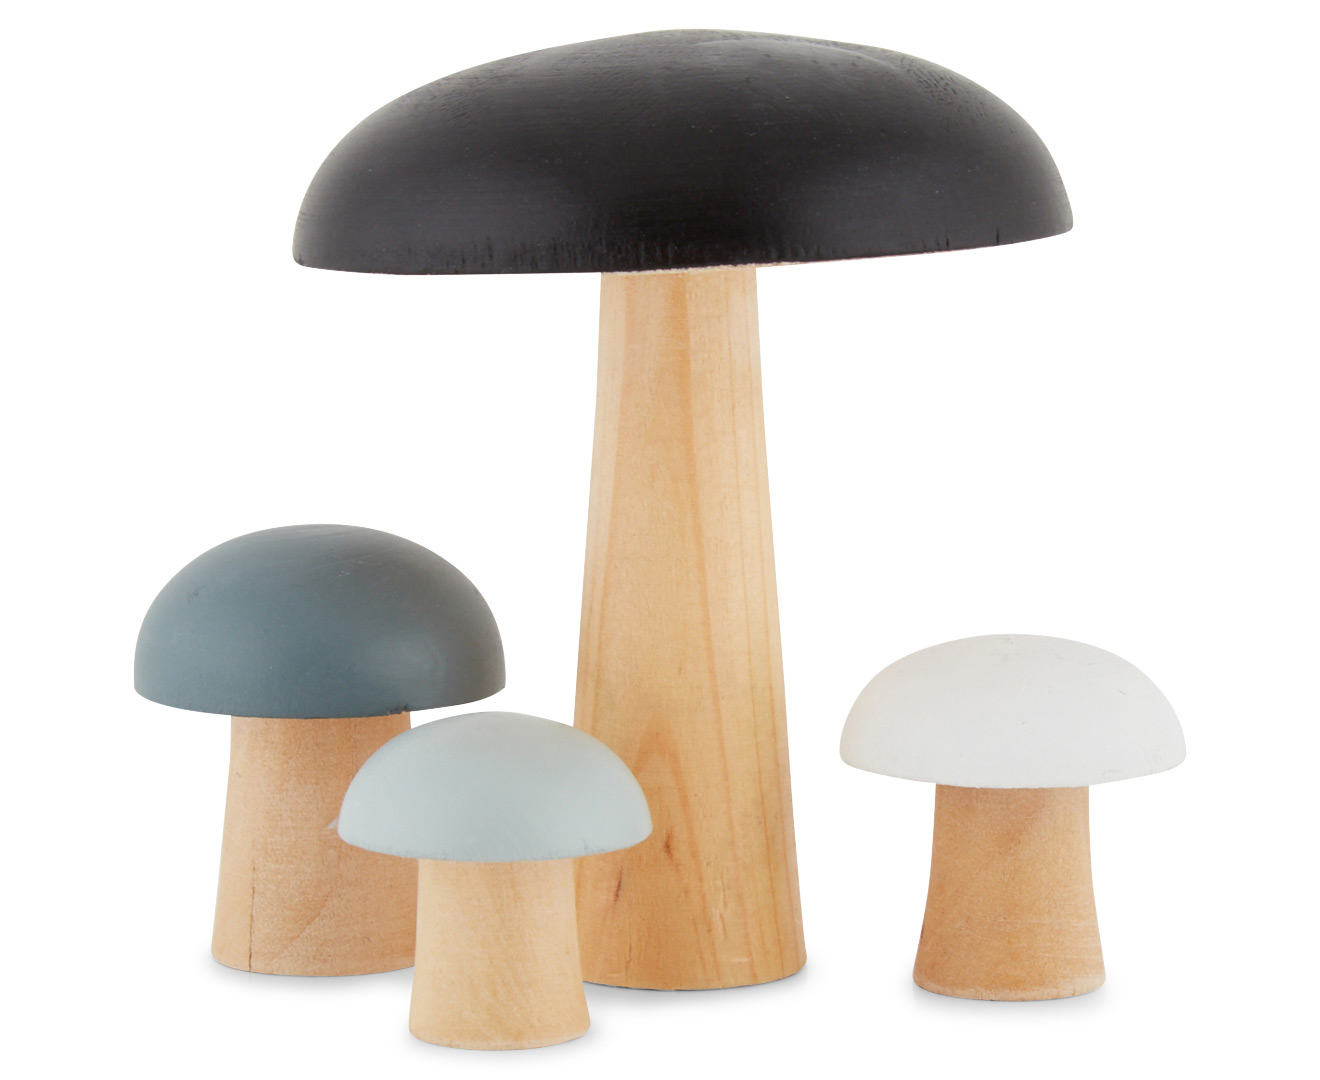 Kids Concepts Mushroom Ornament Set - Black/White/Grey